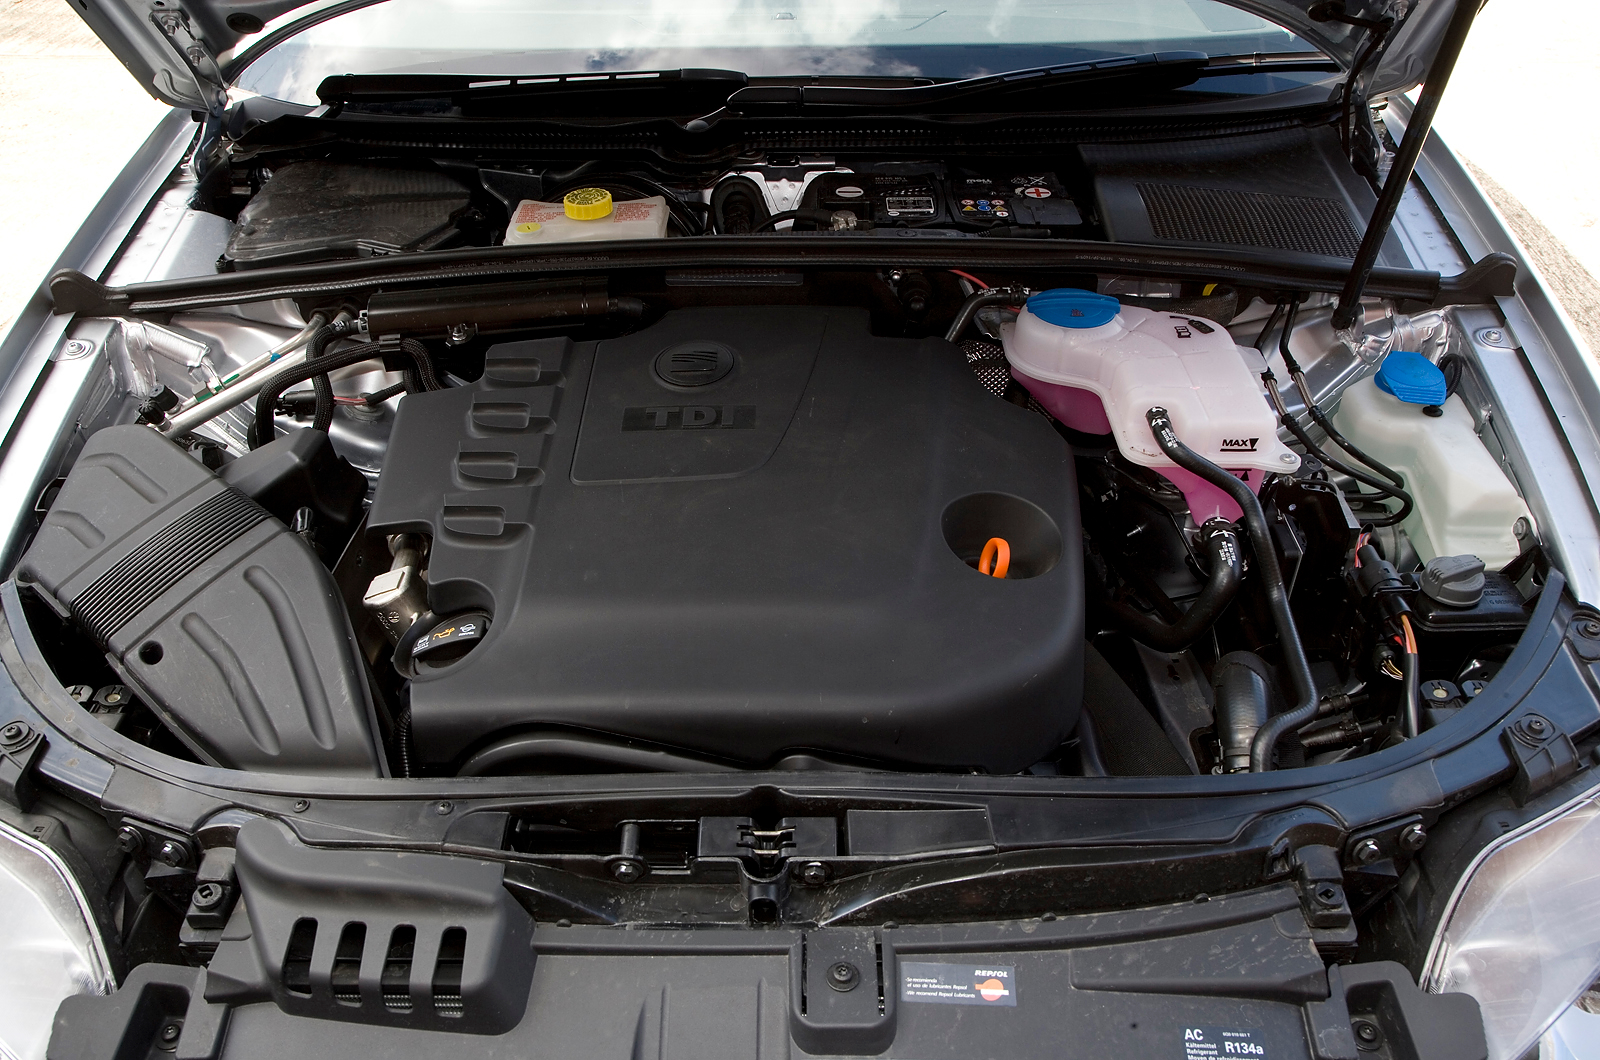 2.0-litre Seat Exeo diesel engine